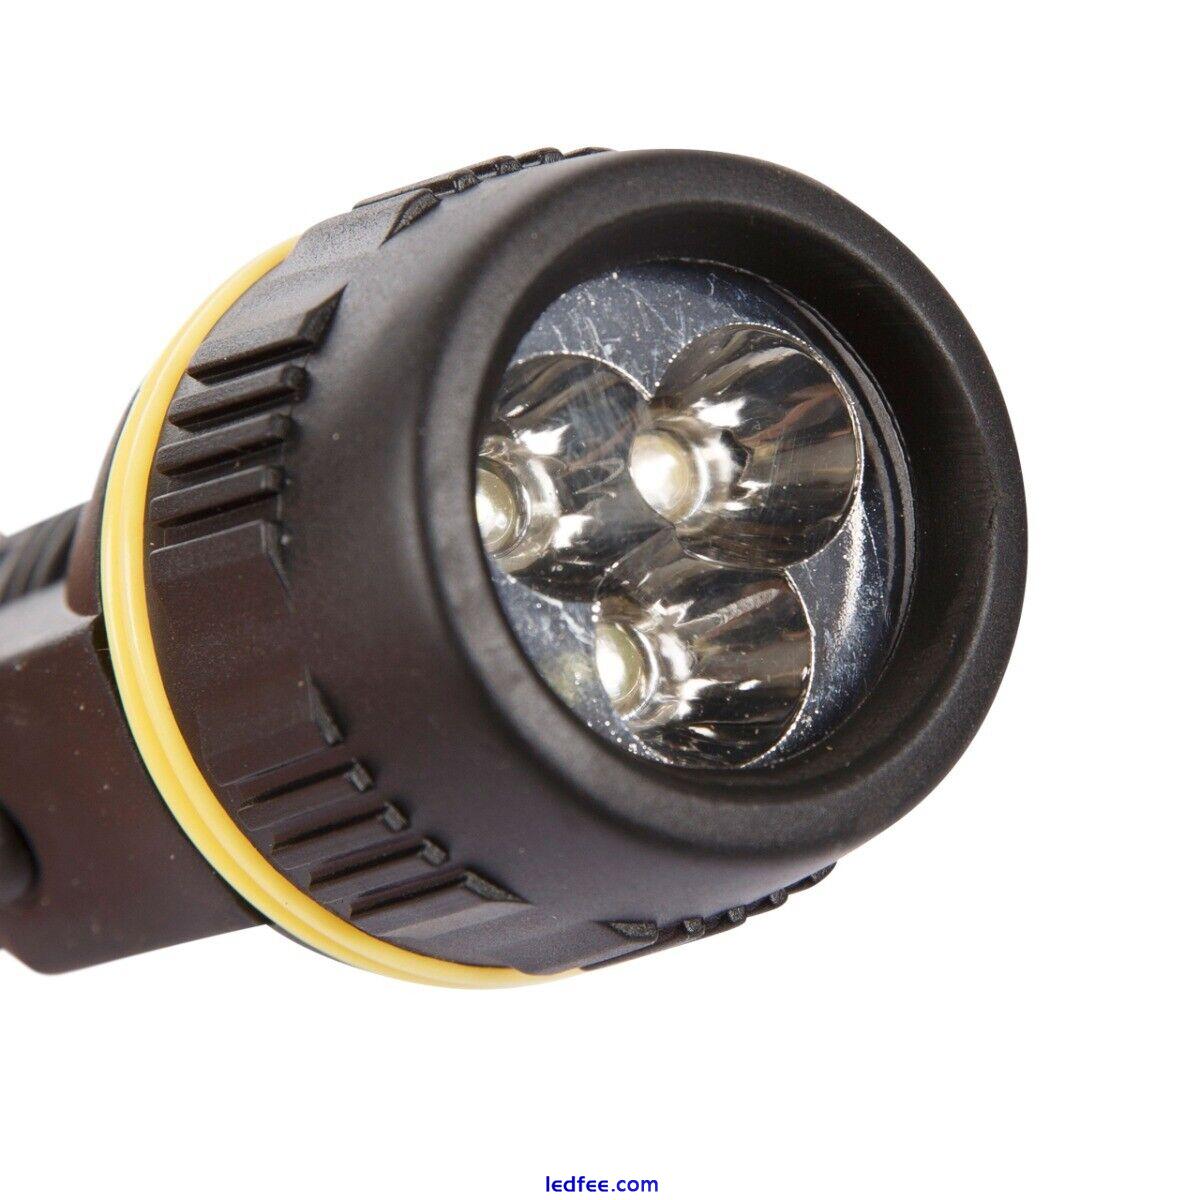 Trespass 3 LED Lightweight Torch Rubber Grip Water Shock Resistant 2 